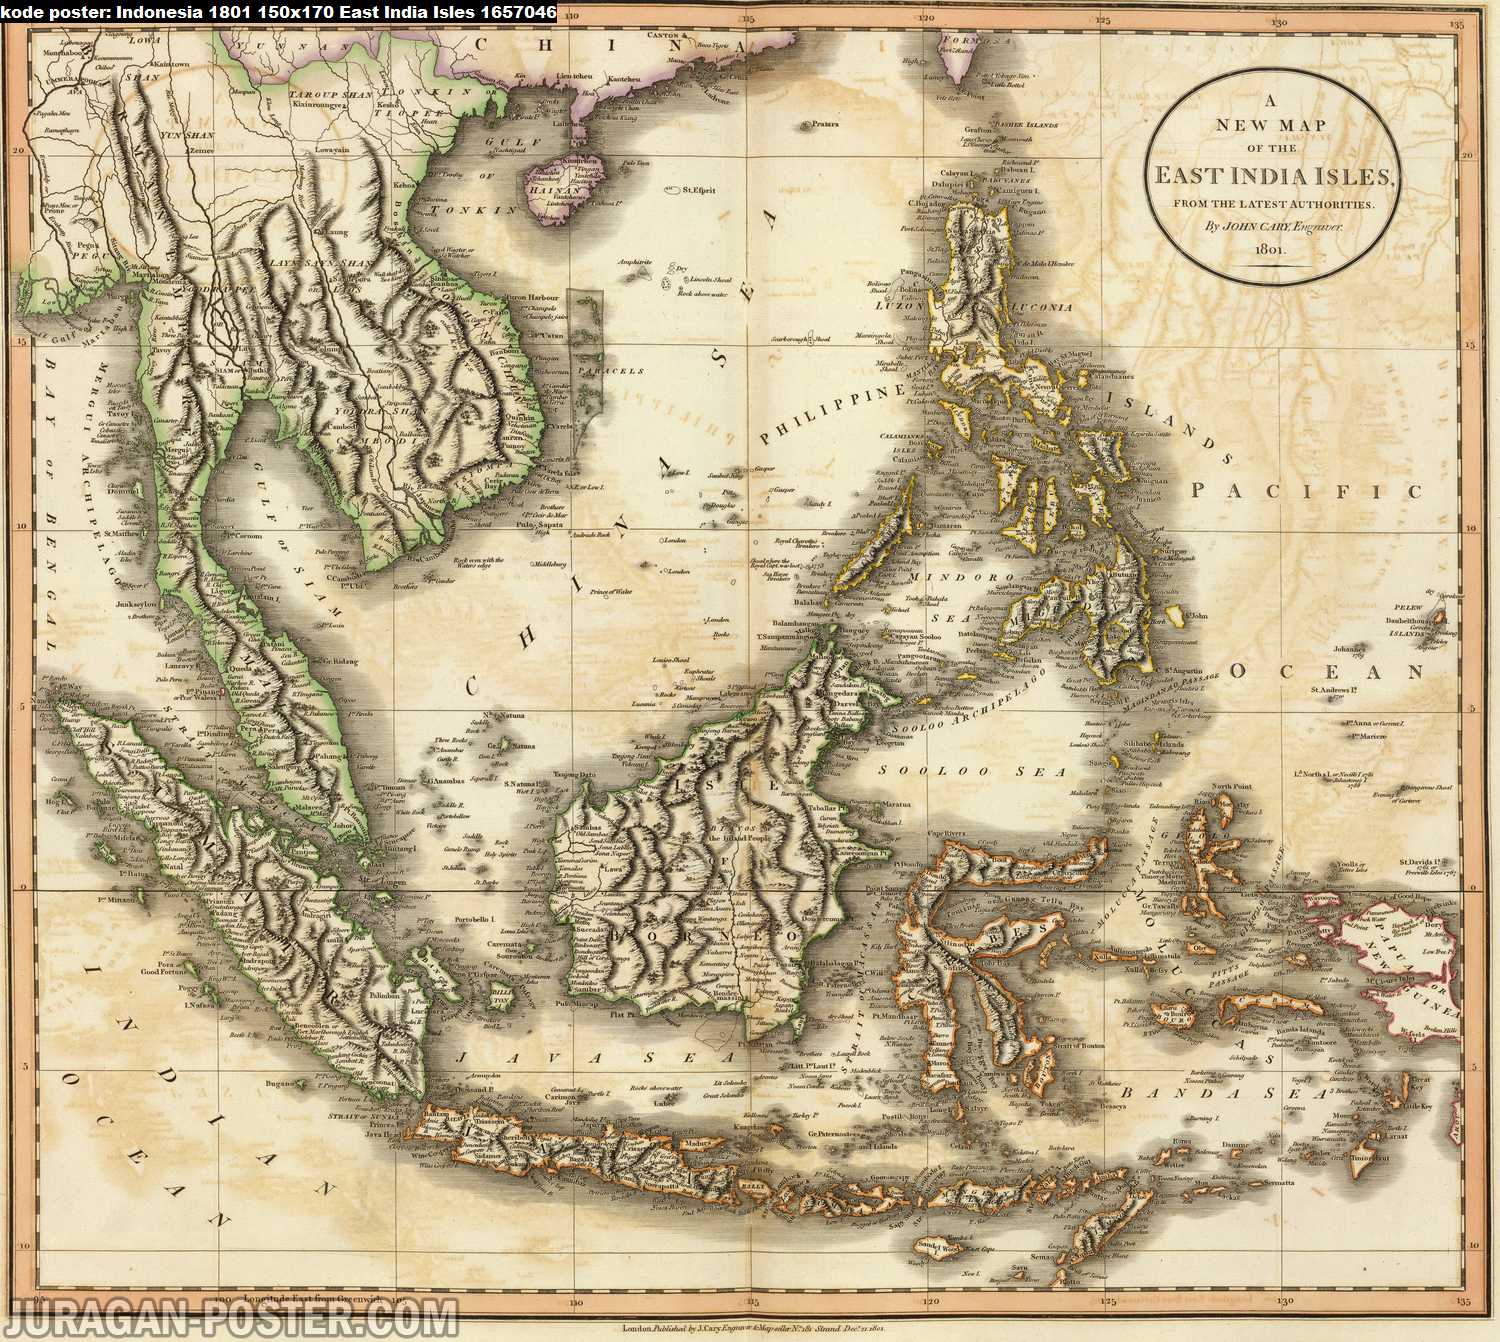 peta indonesia kuno tahun 1801